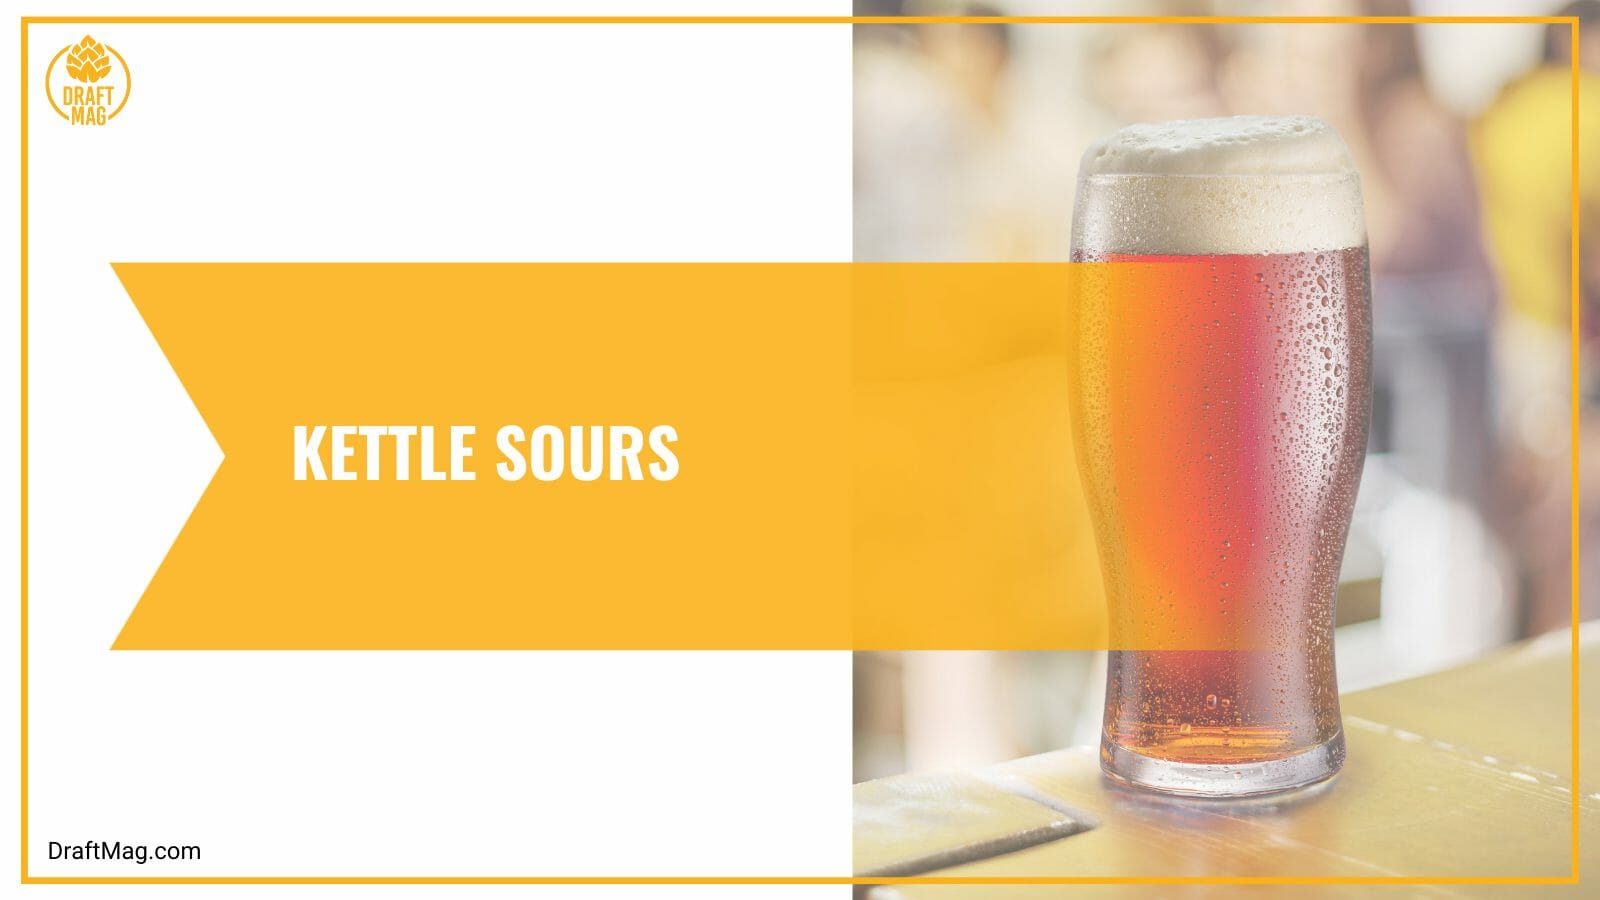 Kettle sours session beer